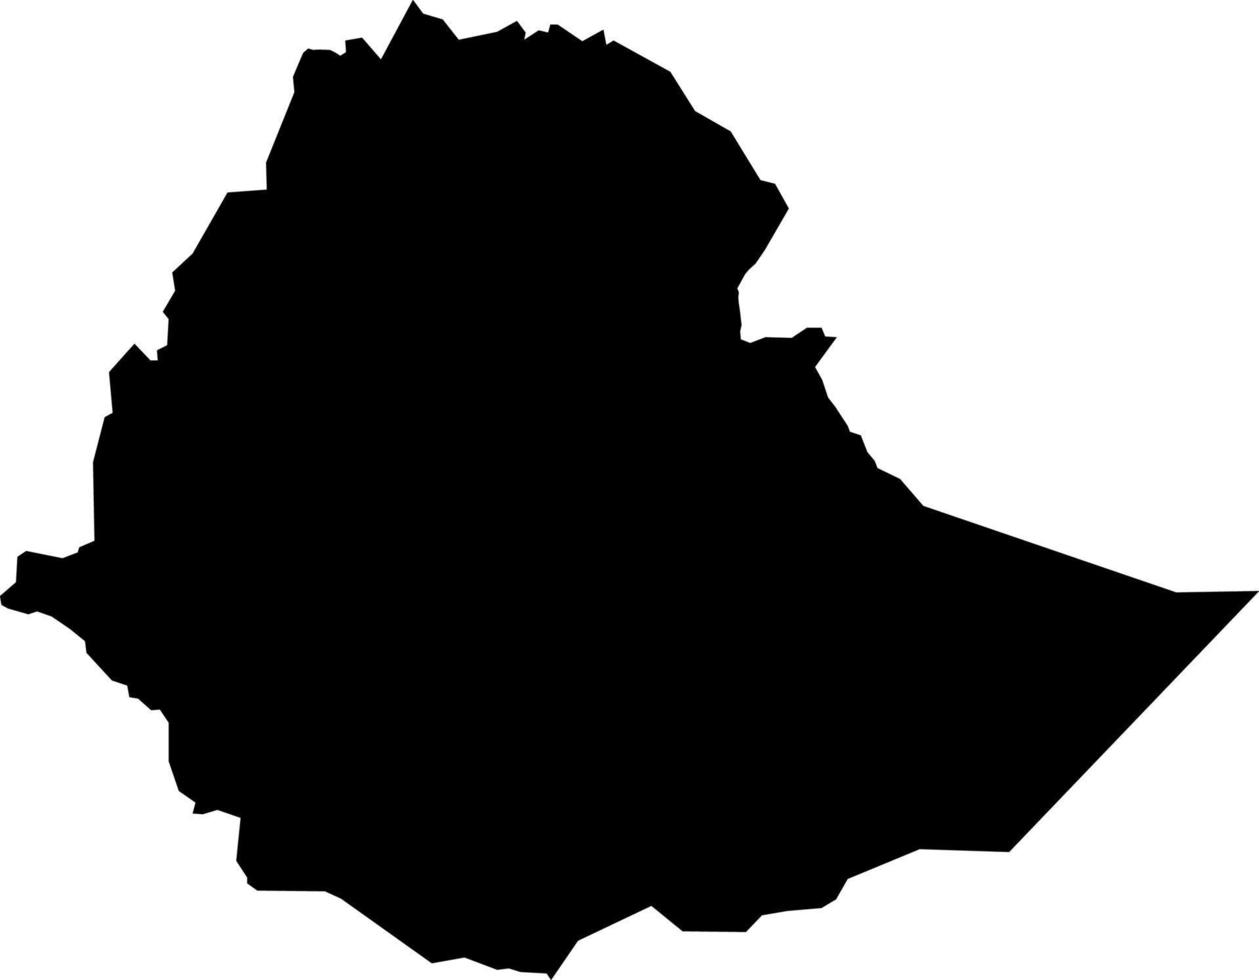 África Etiopía mapa vector mapa.mano dibujado minimalismo estilo.